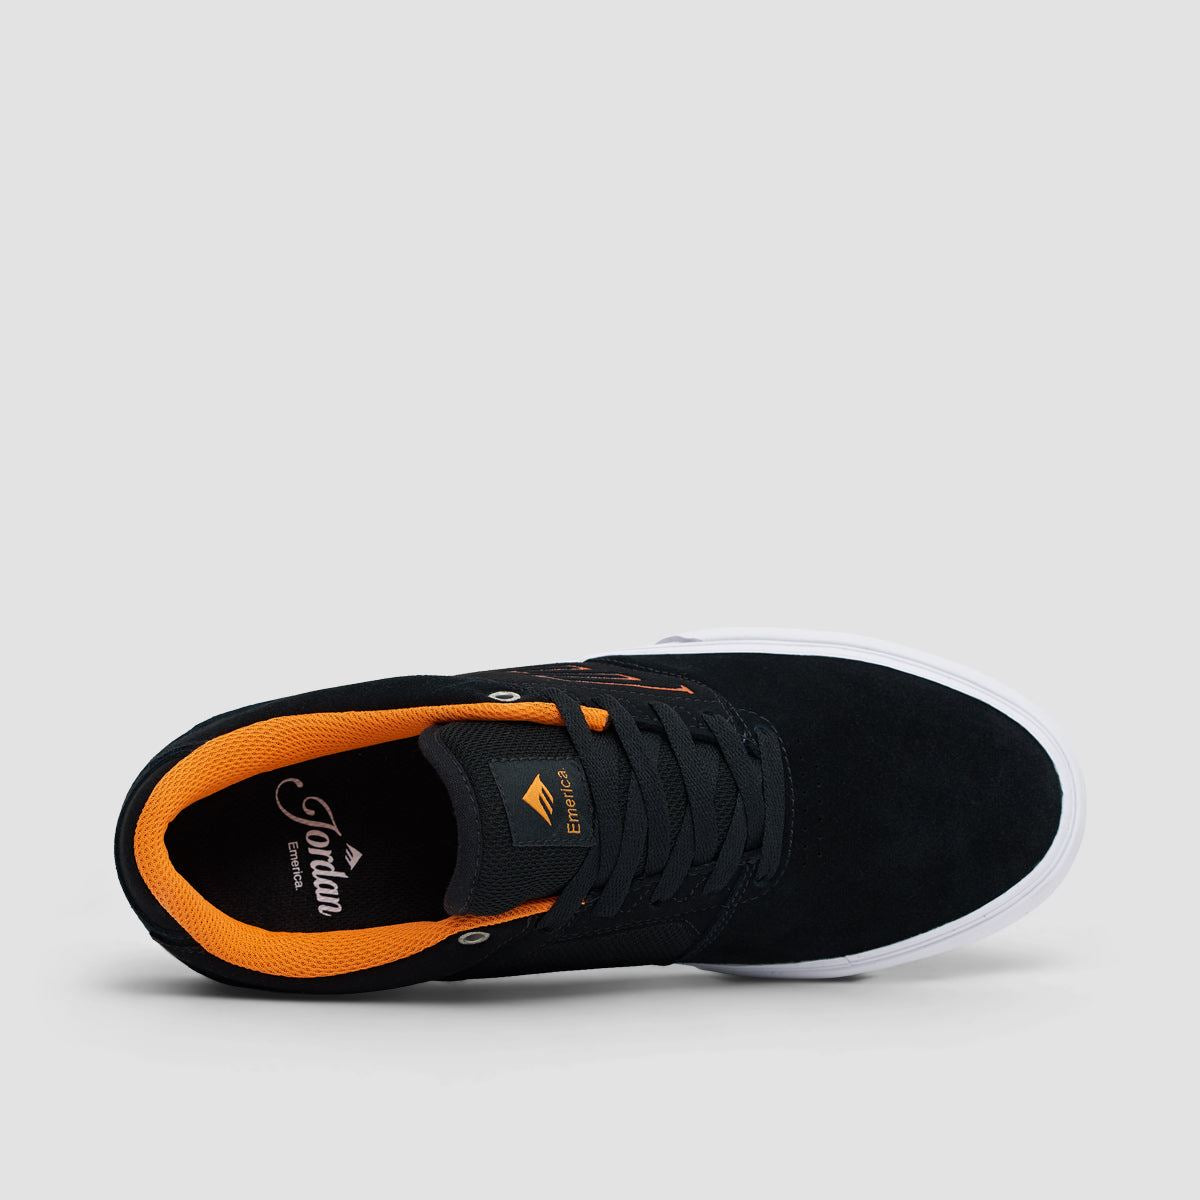 Emerica The Low Vulc Shoes - Black/White/Orange